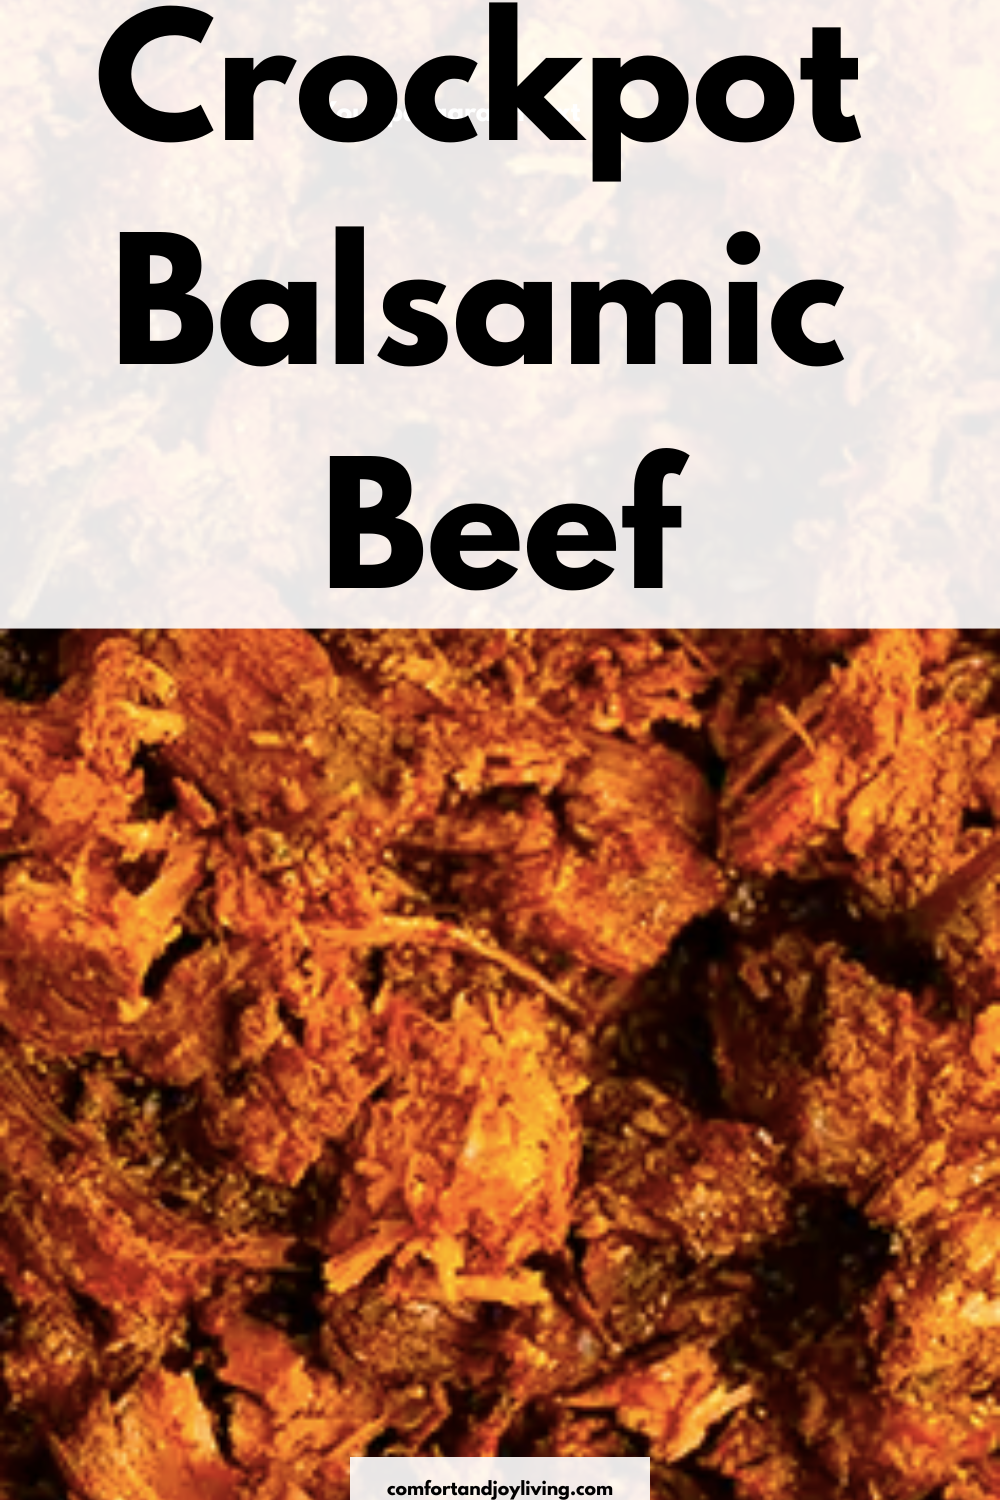 Crockpot Balsamic Beef